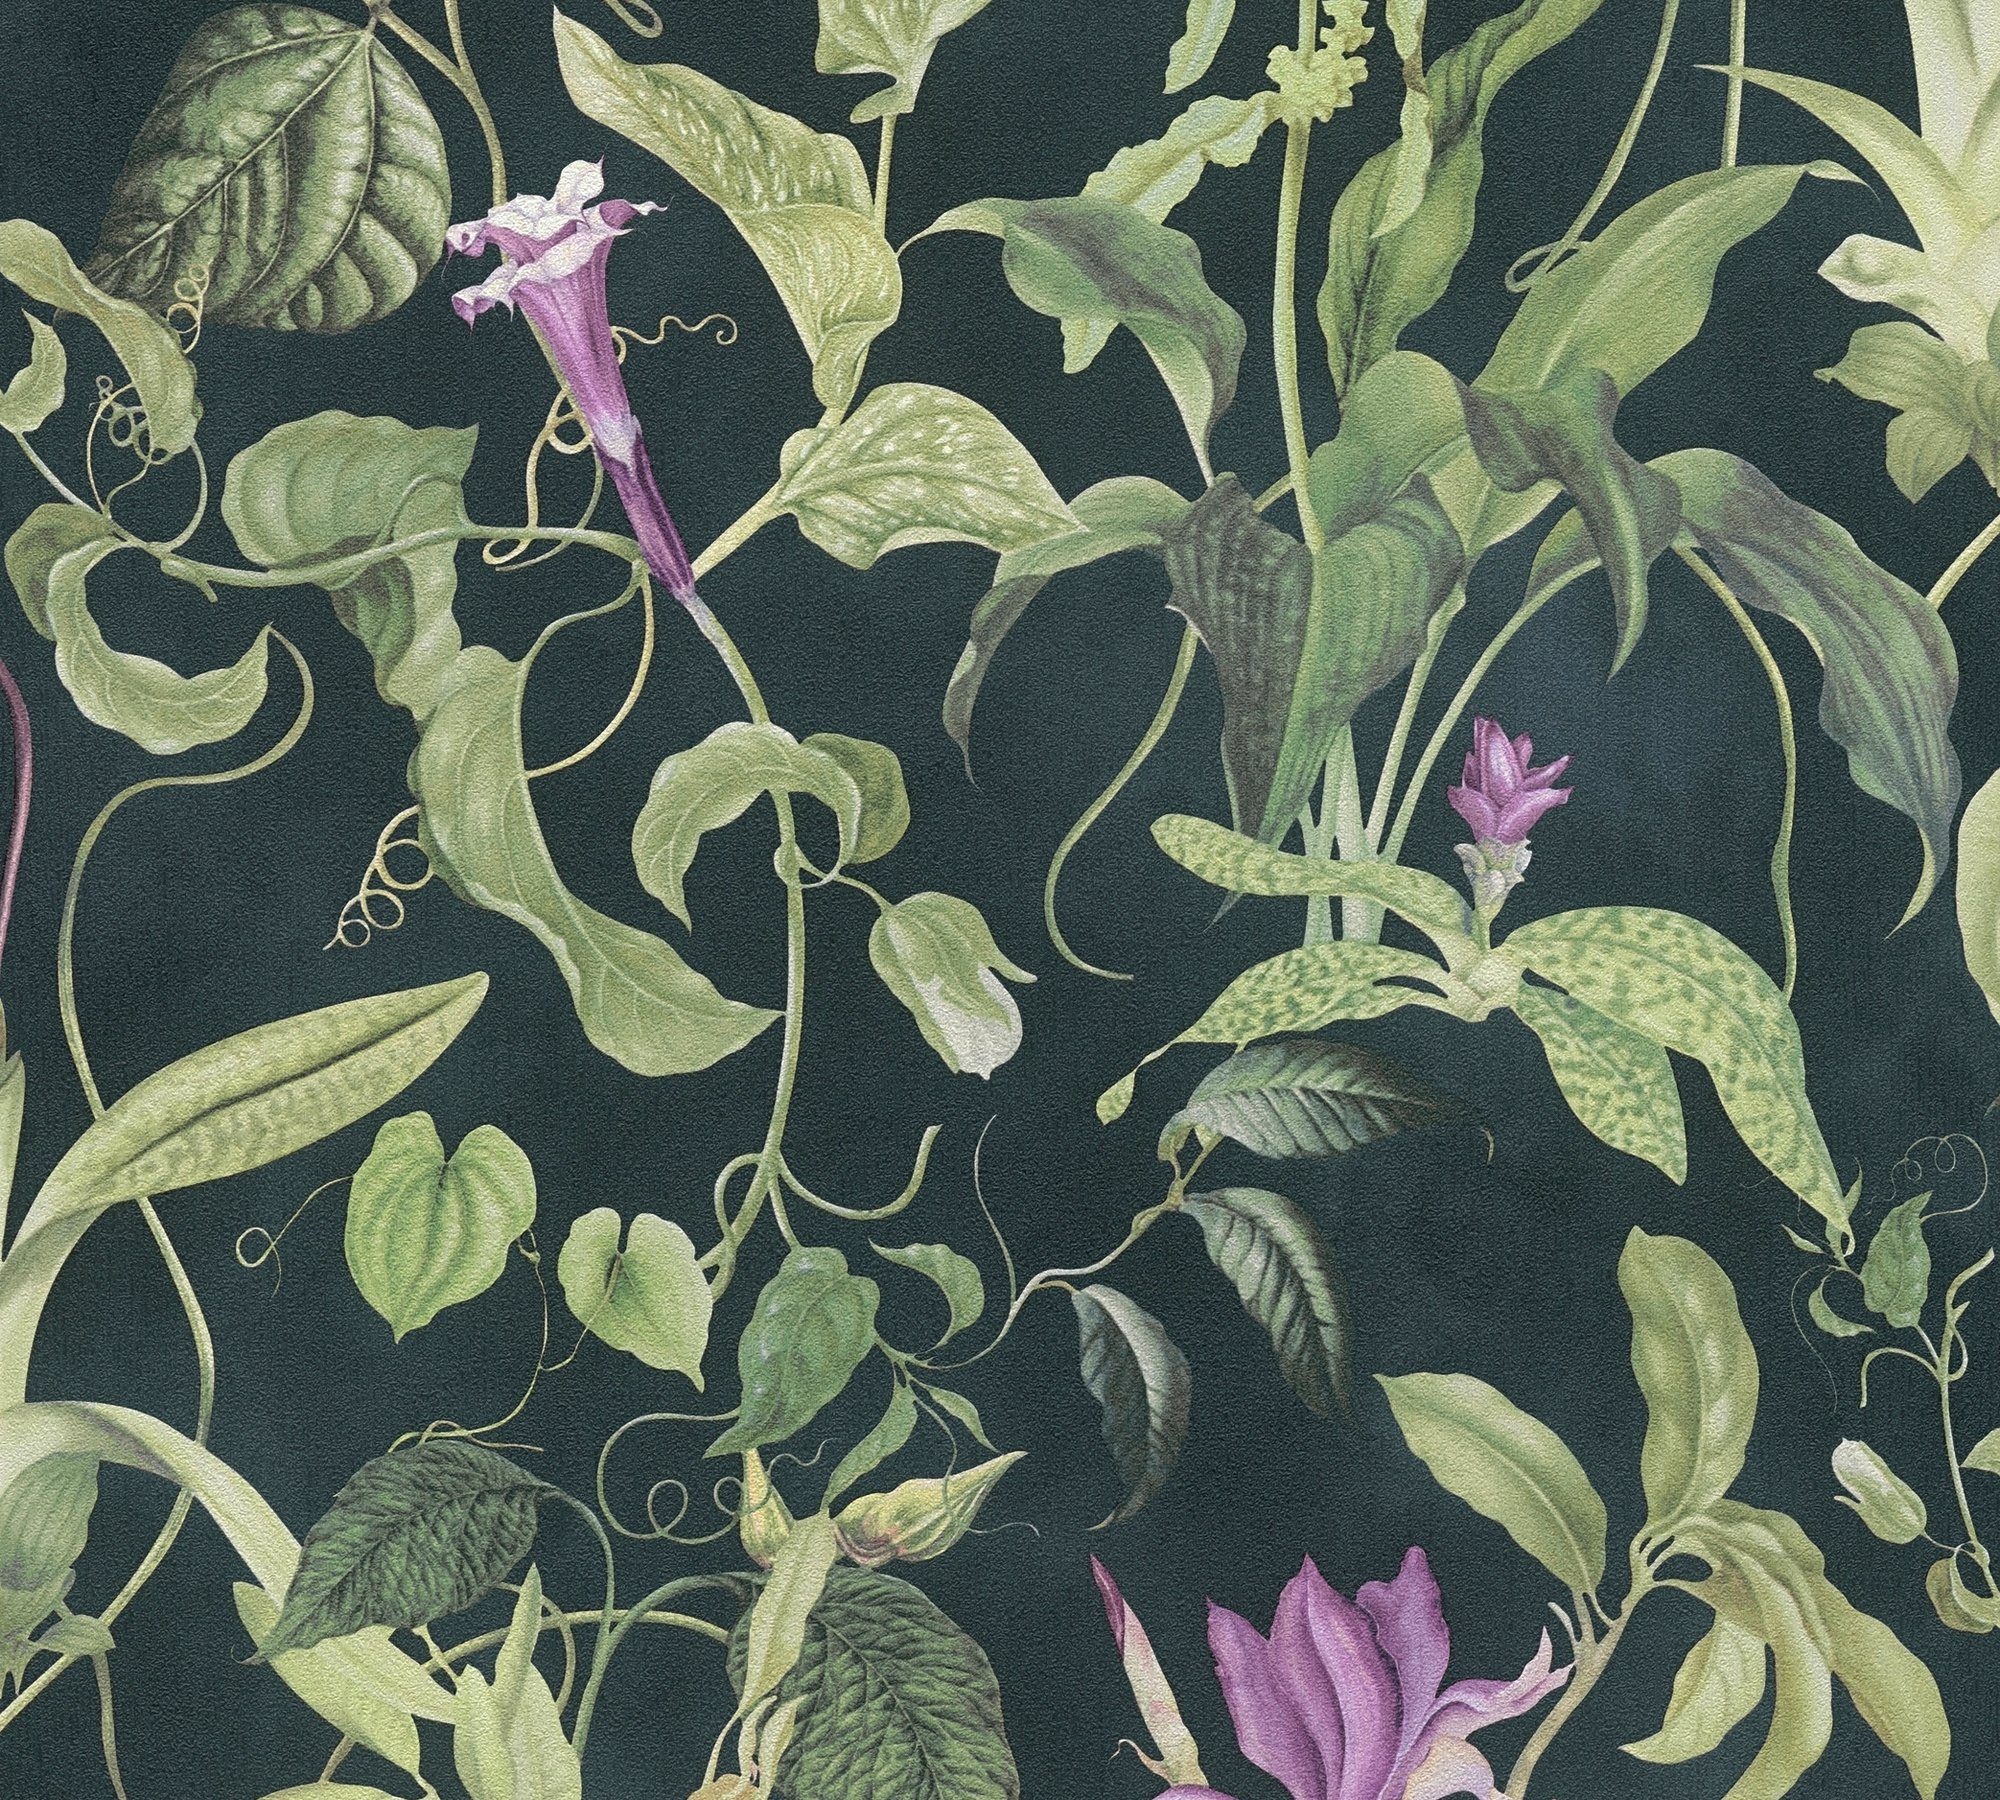 LIVING botanisch, METROPOLIS BY Tapete floral, schwarz/grün/lila Dschungel good, tropisch, MICHALSKY Designertapete A.S. Vliestapete Change Création is